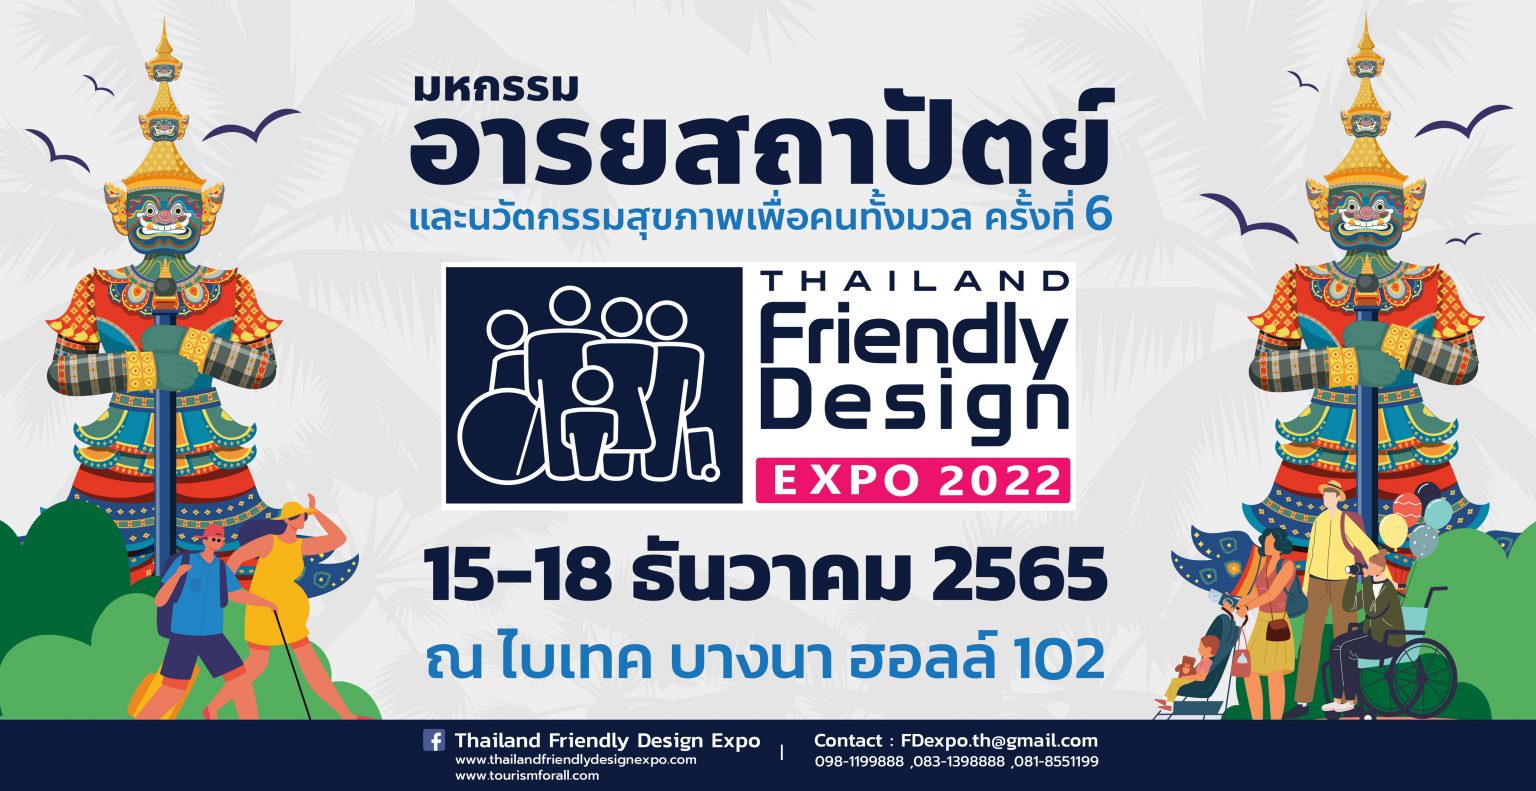 Thailand Friendly Design Expo 2022 Bangkok International Trade